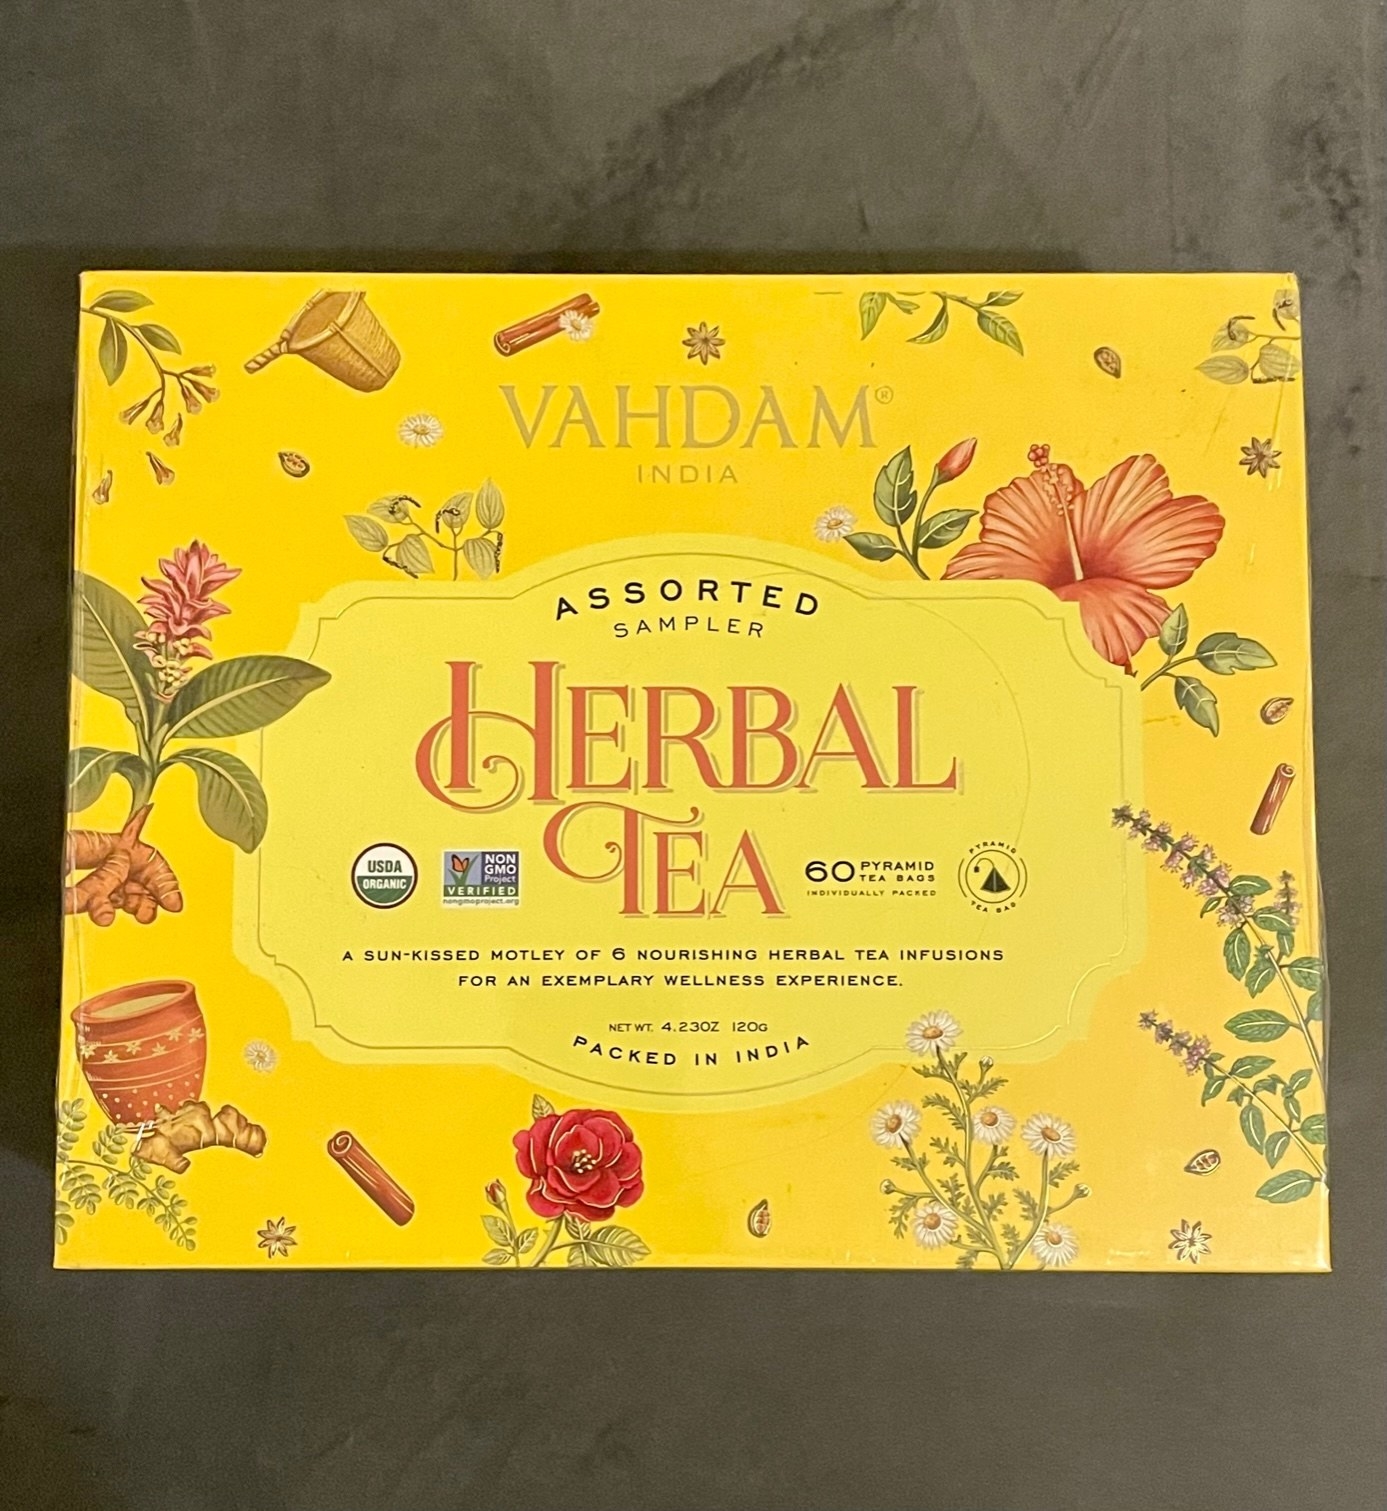 A closed yellow box of herbal tea